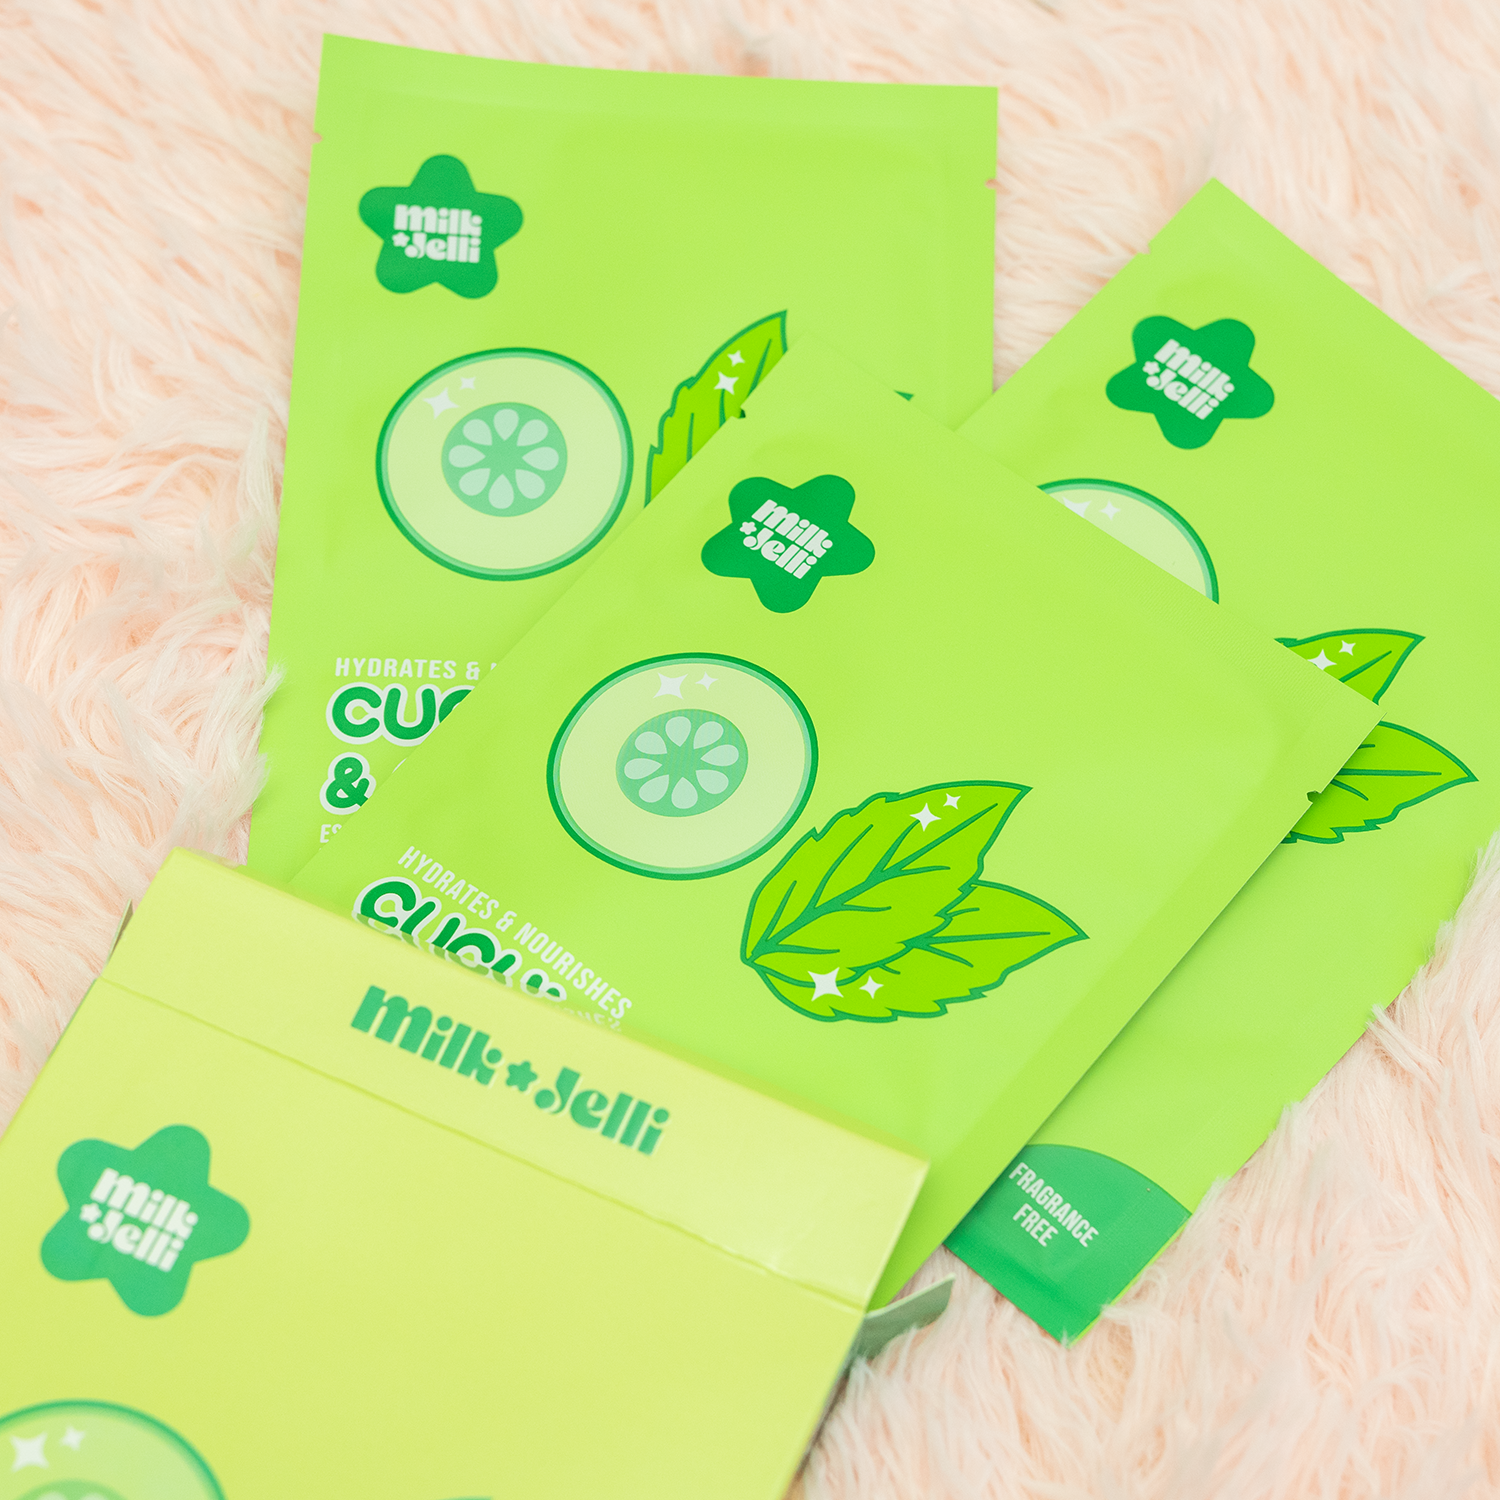 Cucumber + Green Tea Face Mask Box of 7